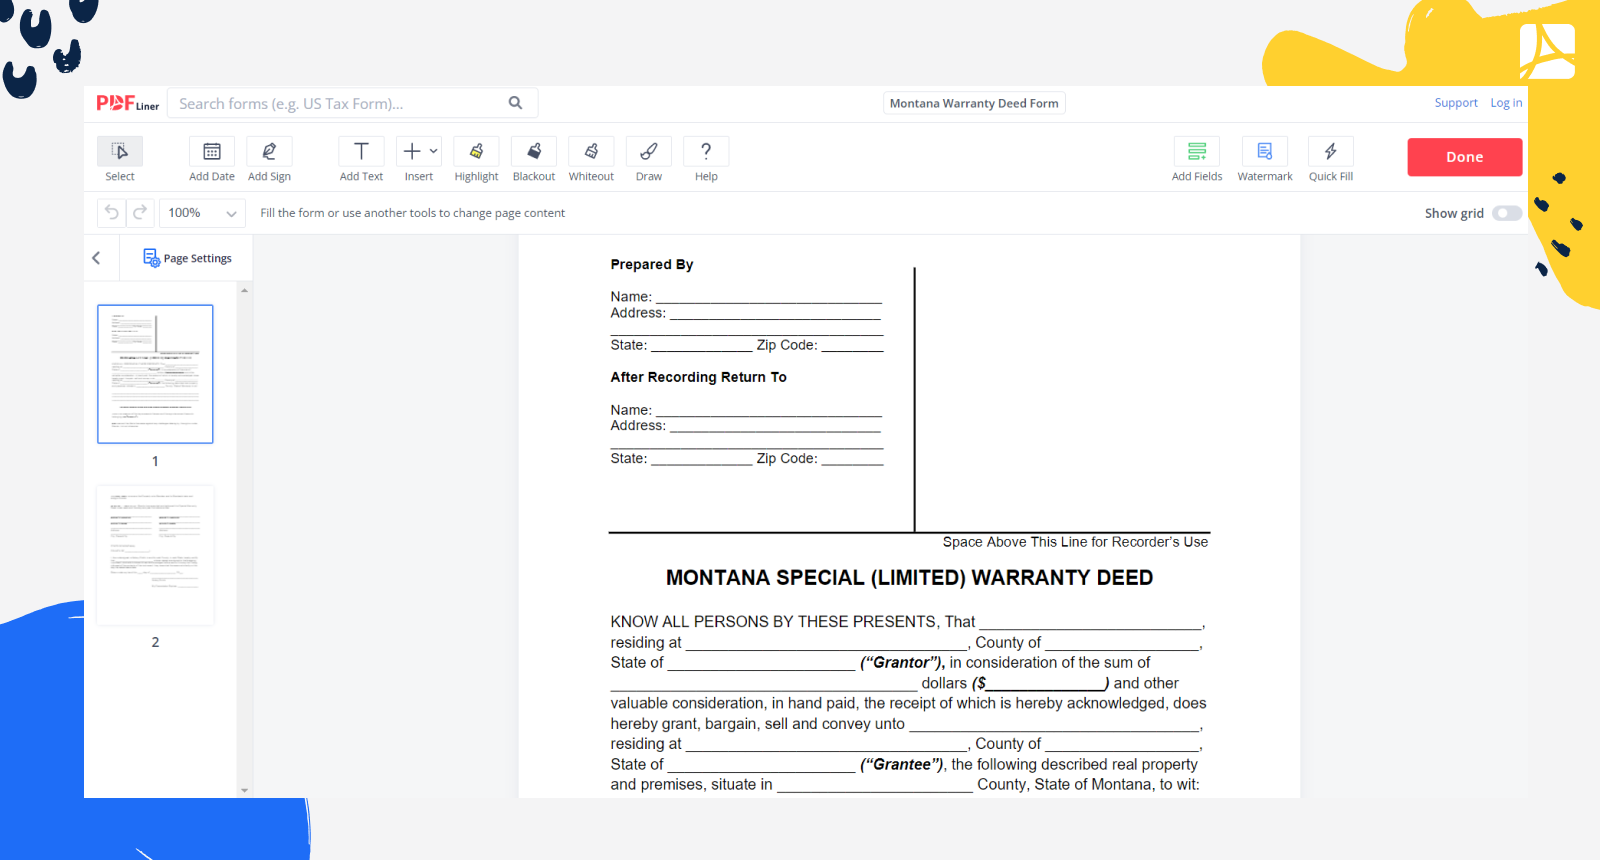 Montana Warranty Deed Form Screenshot